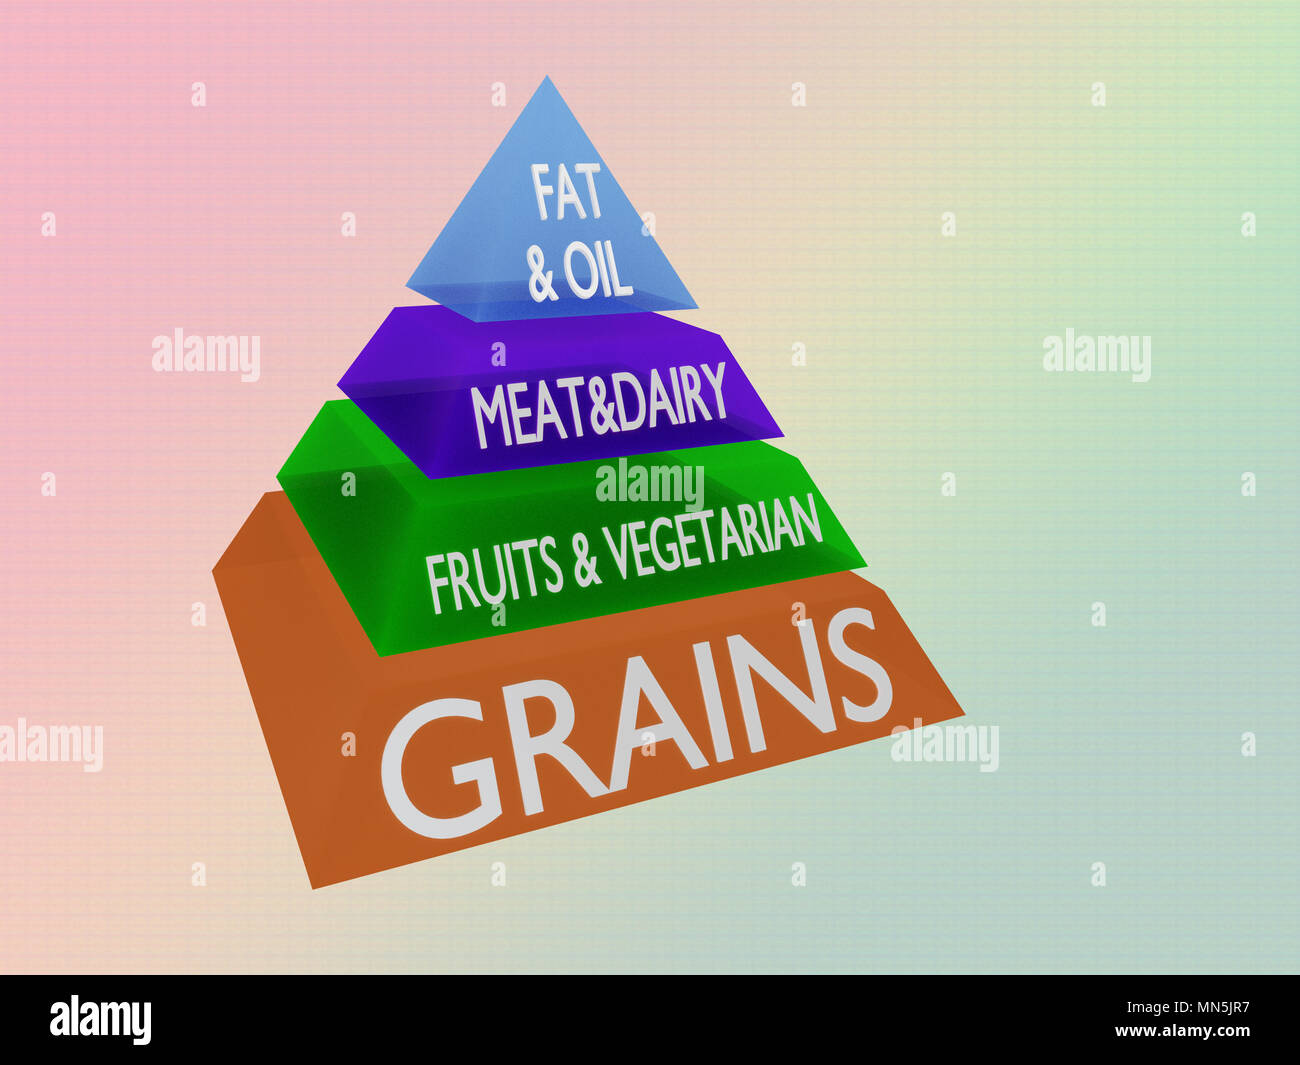 Food Pyramid Chart Stock Photos Food Pyramid Chart Stock Images